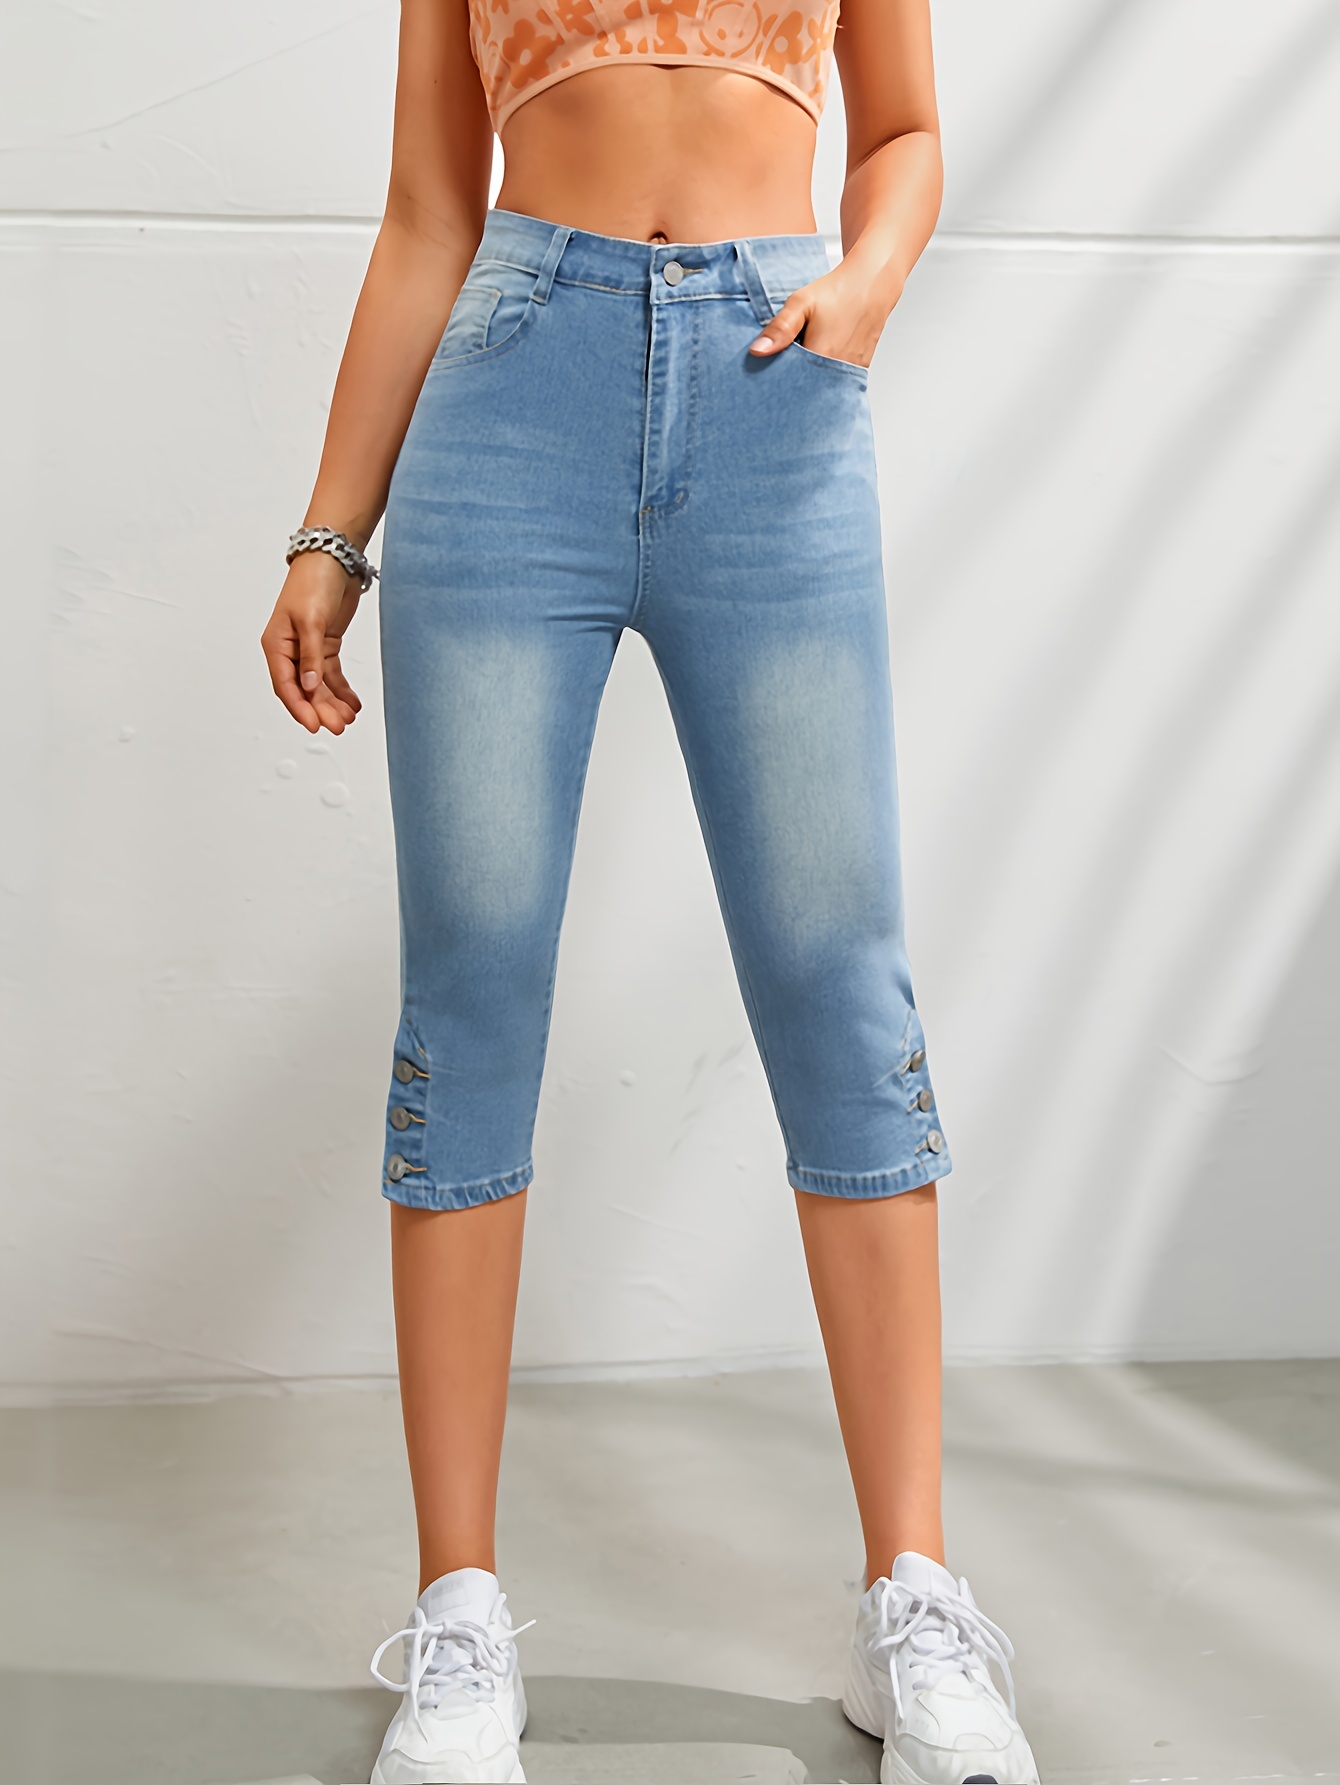 KA * Jeans Capri De Textura Suave Para Mujer , Cintura Elástica , Agujeros  Rasgados , Pantalones De Mezclilla Flacos , Dos Bolsillos , Streetwear